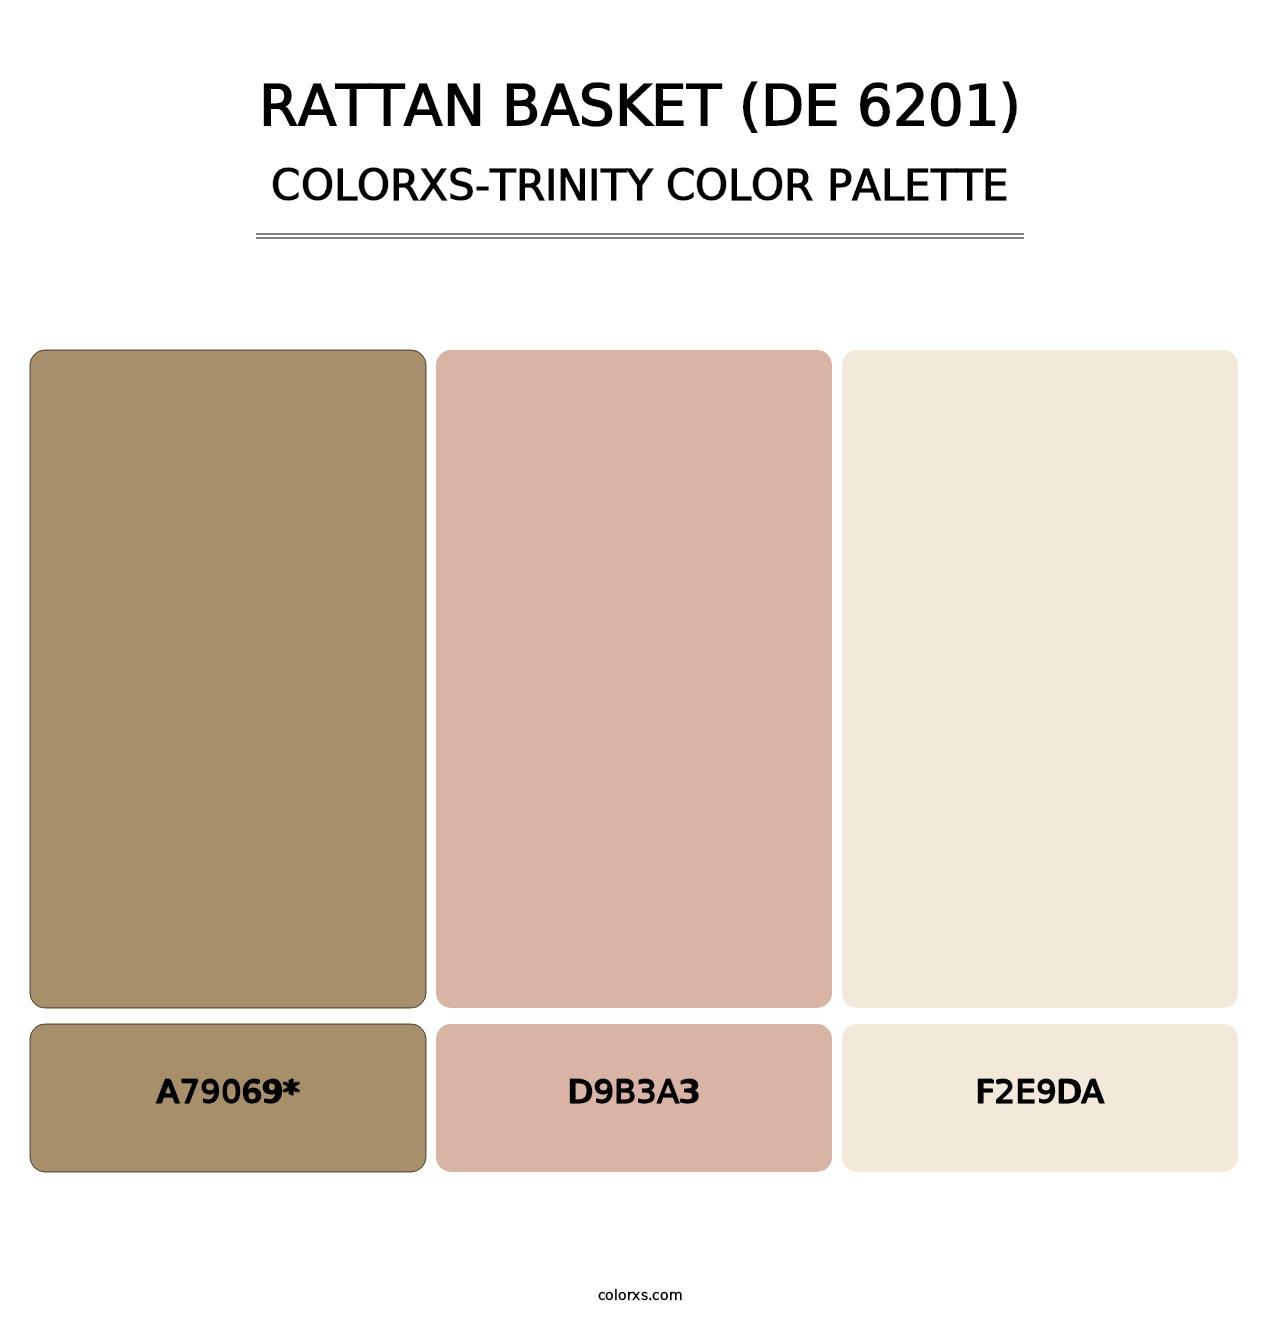 Rattan Basket (DE 6201) - Colorxs Trinity Palette